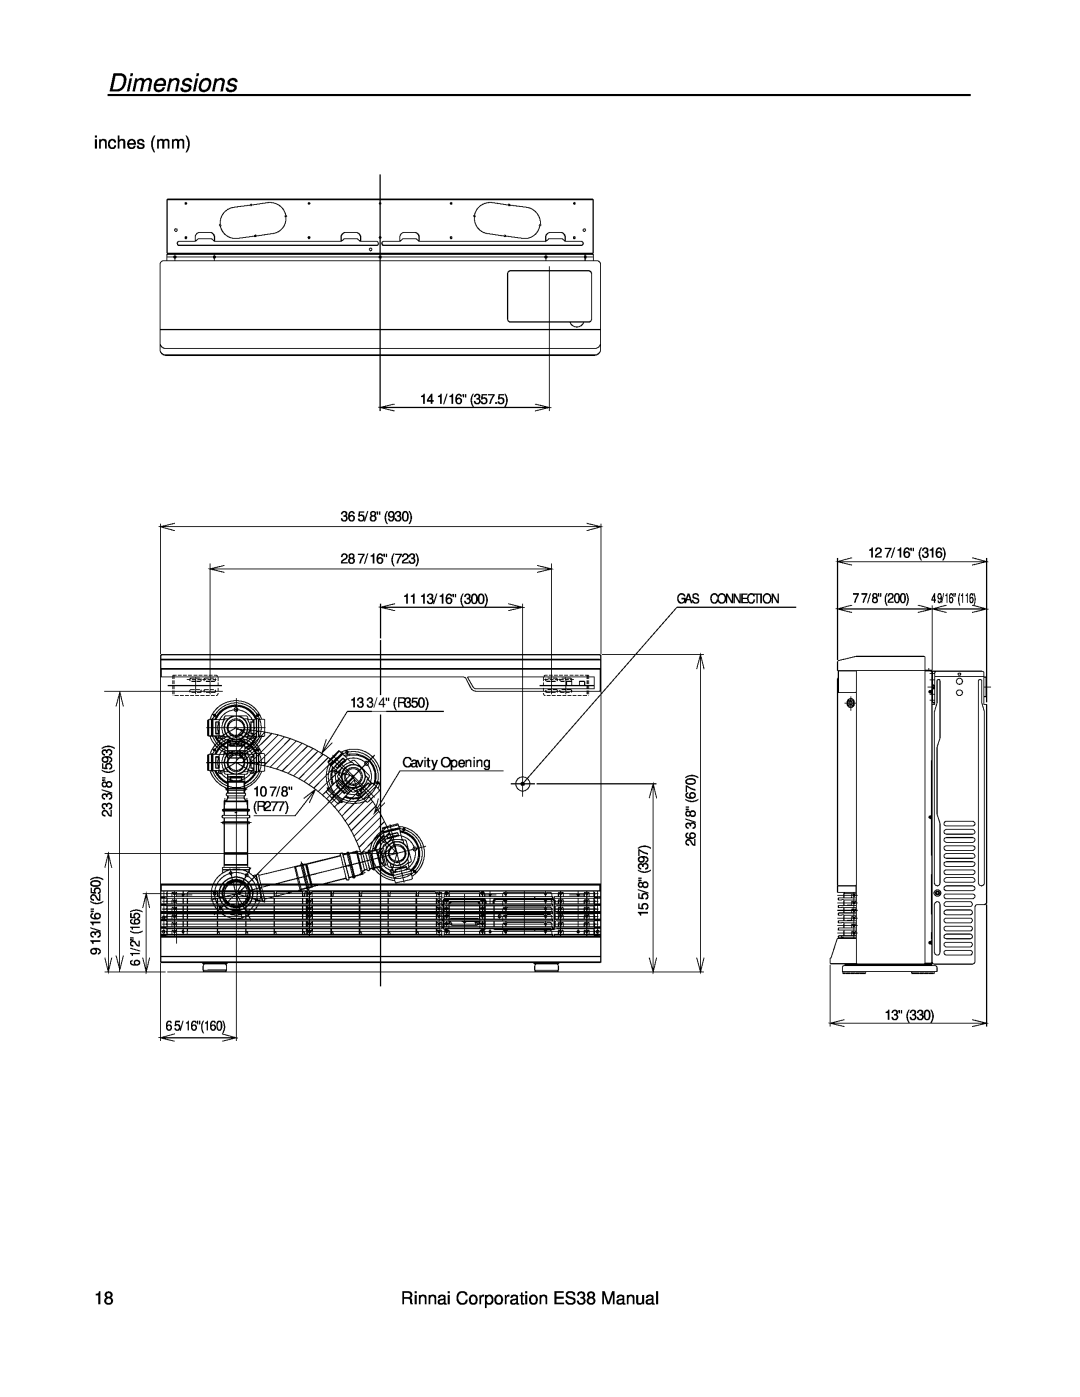 Rinnai installation manual Dimensions, inches mm, Rinnai Corporation ES38 Manual 